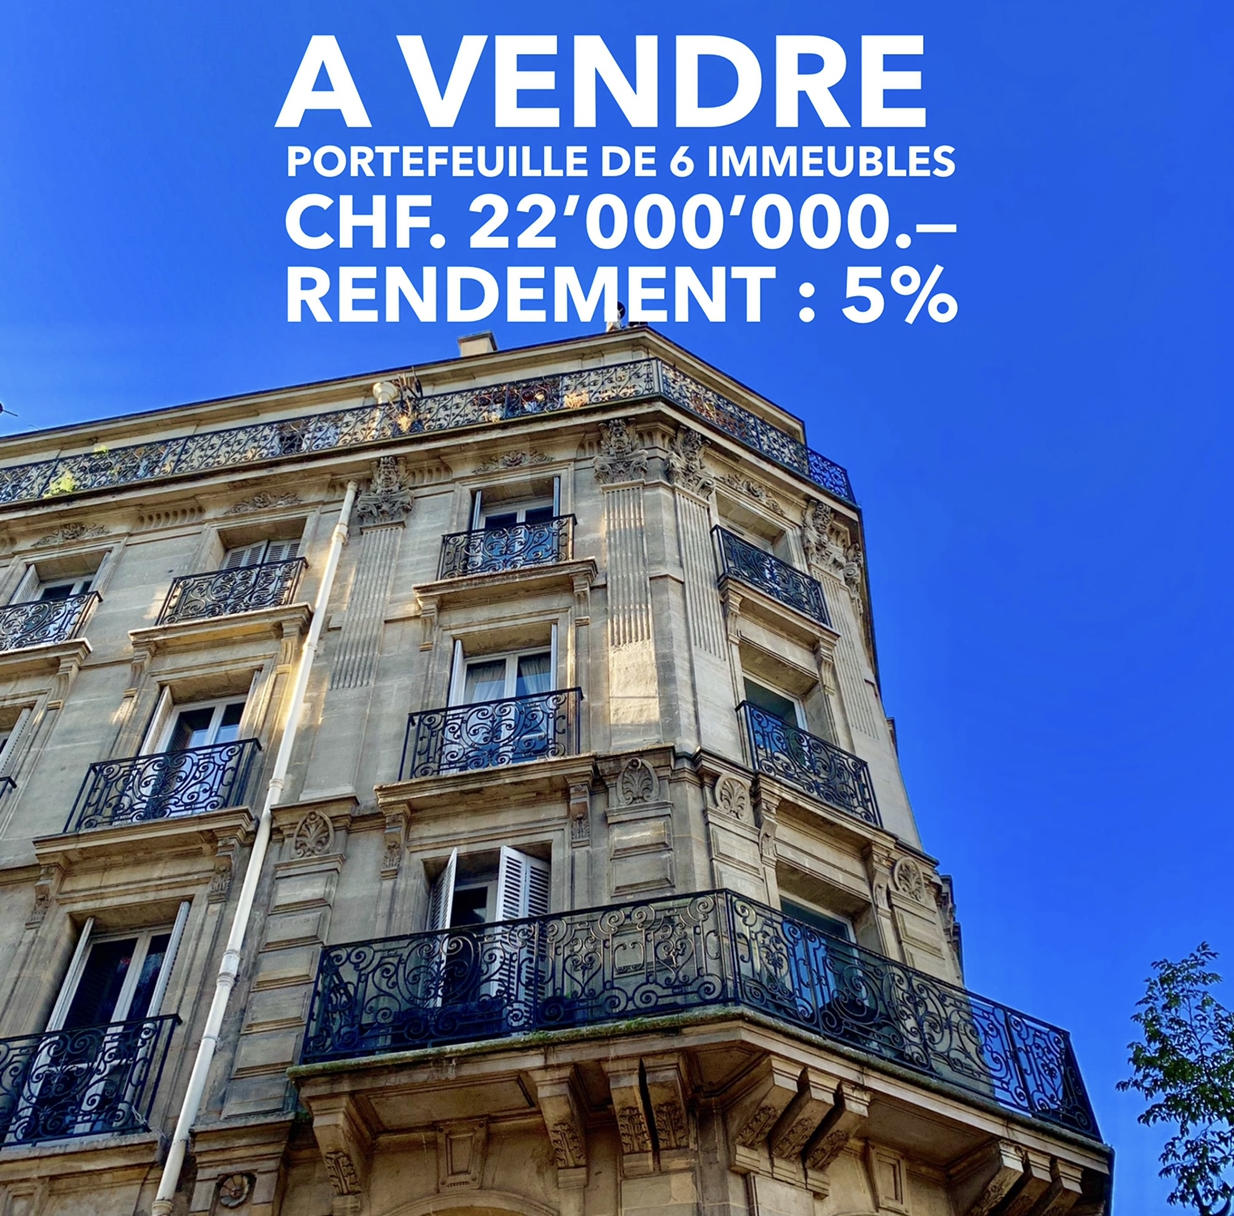 Portefeuille de 6 immeubles CHF. 22’000’000.—